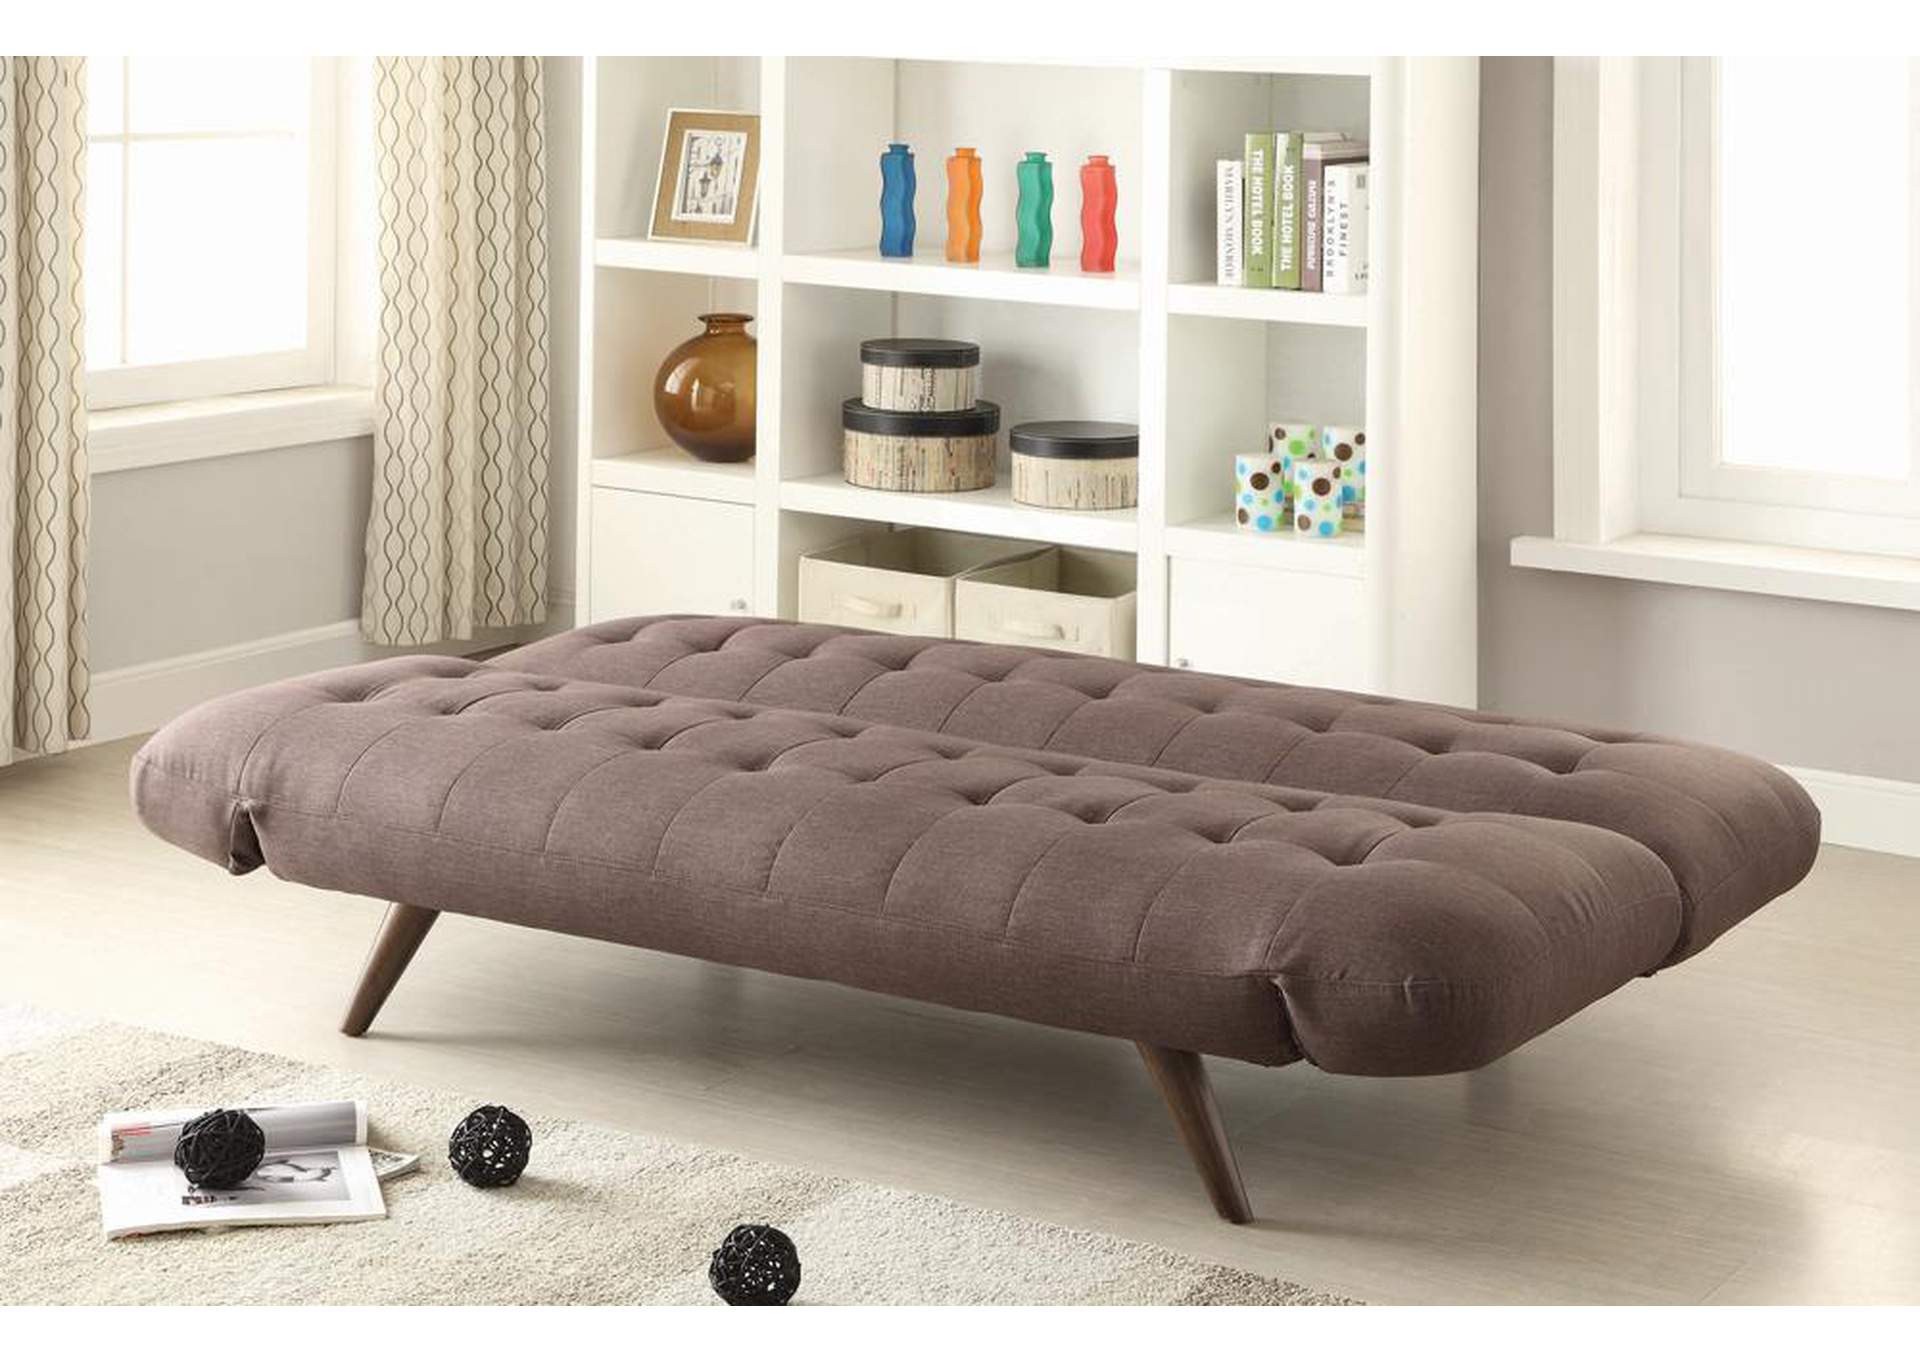 Brown Contemporary Sofa Bed,Coaster Furniture